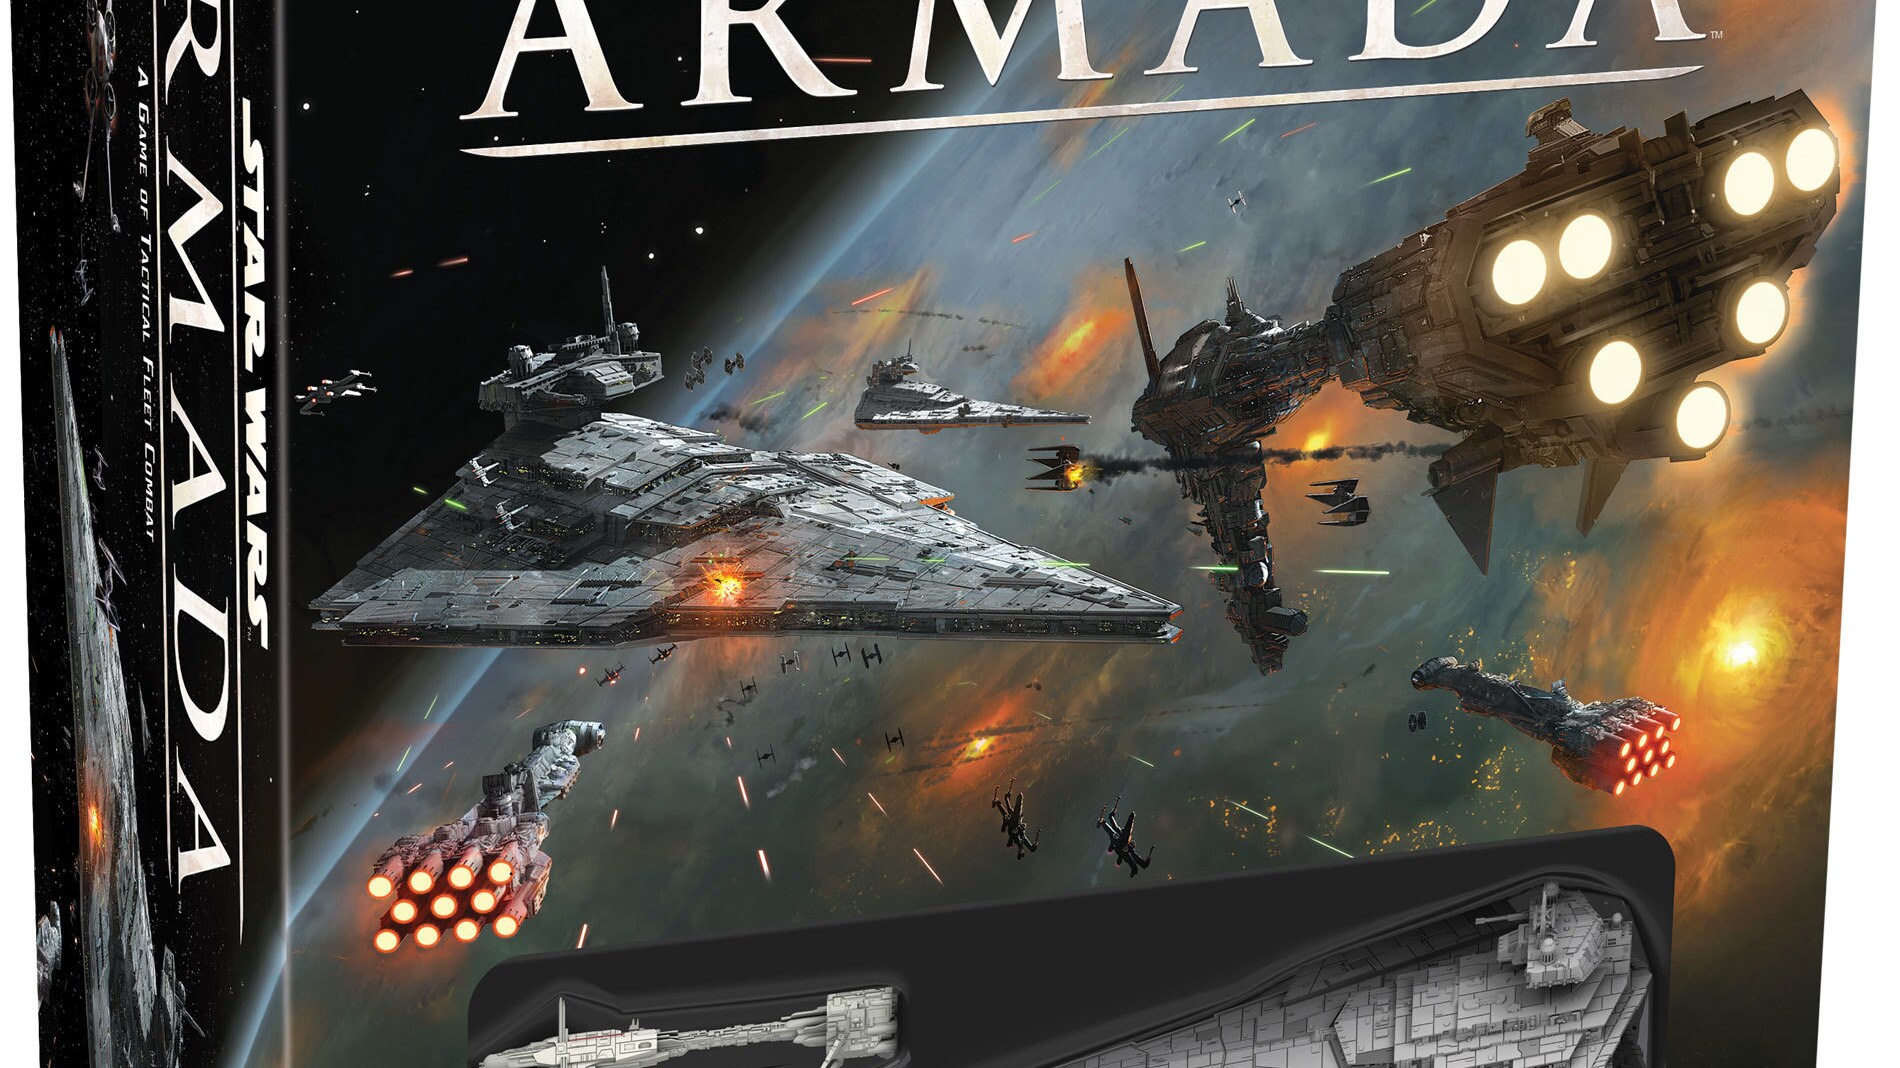 Star Wars Armada by Fantasy Flight Games